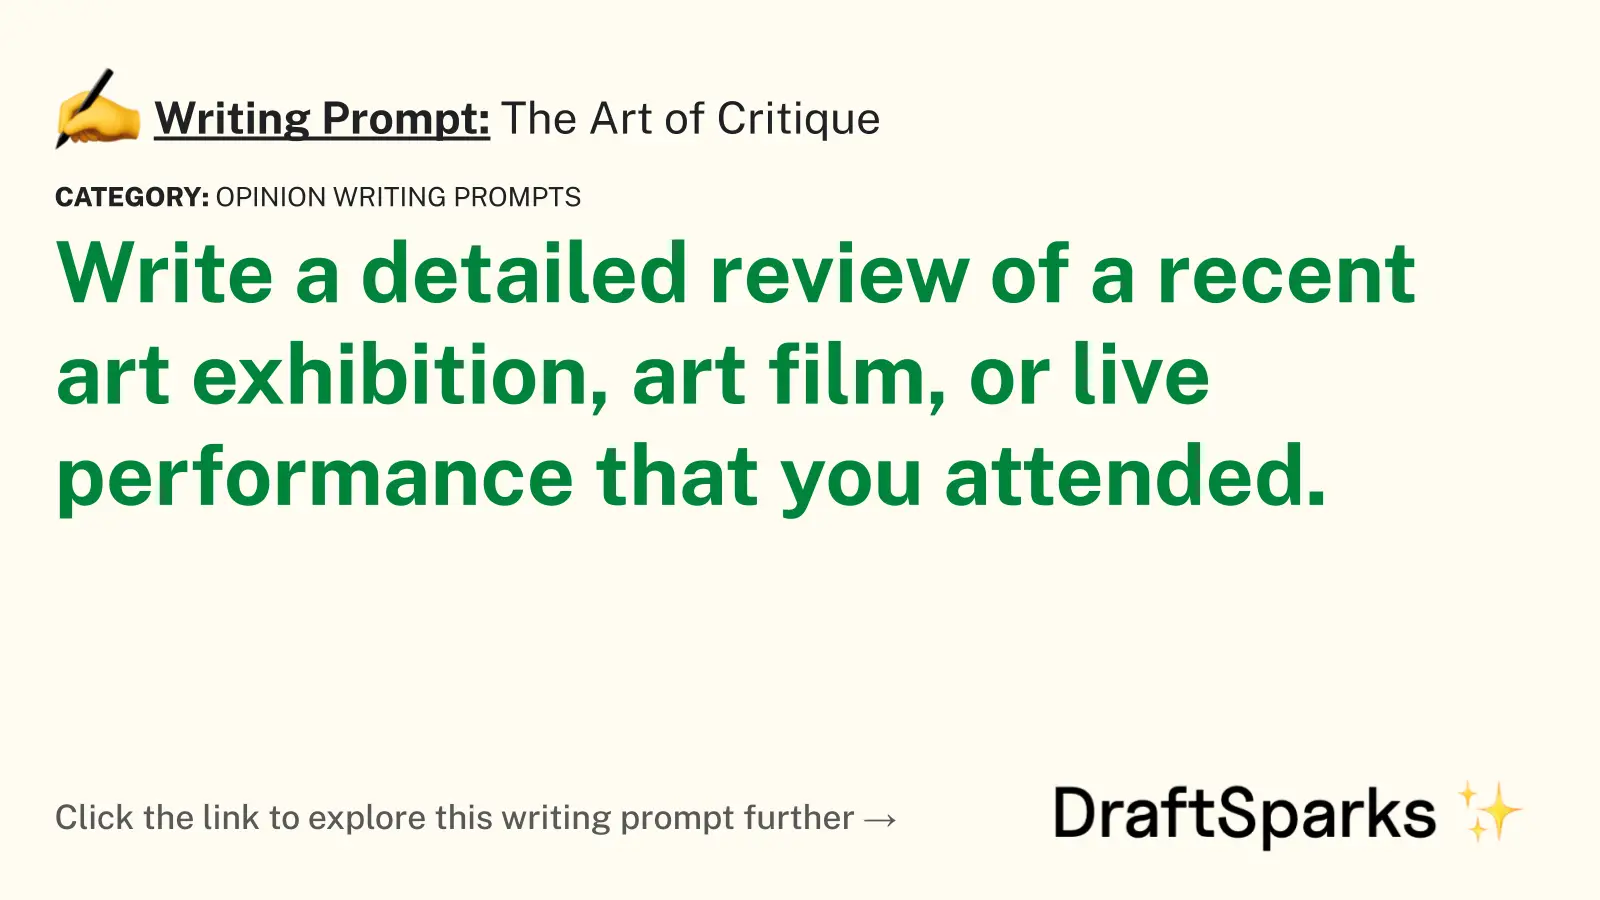 The Art of Critique